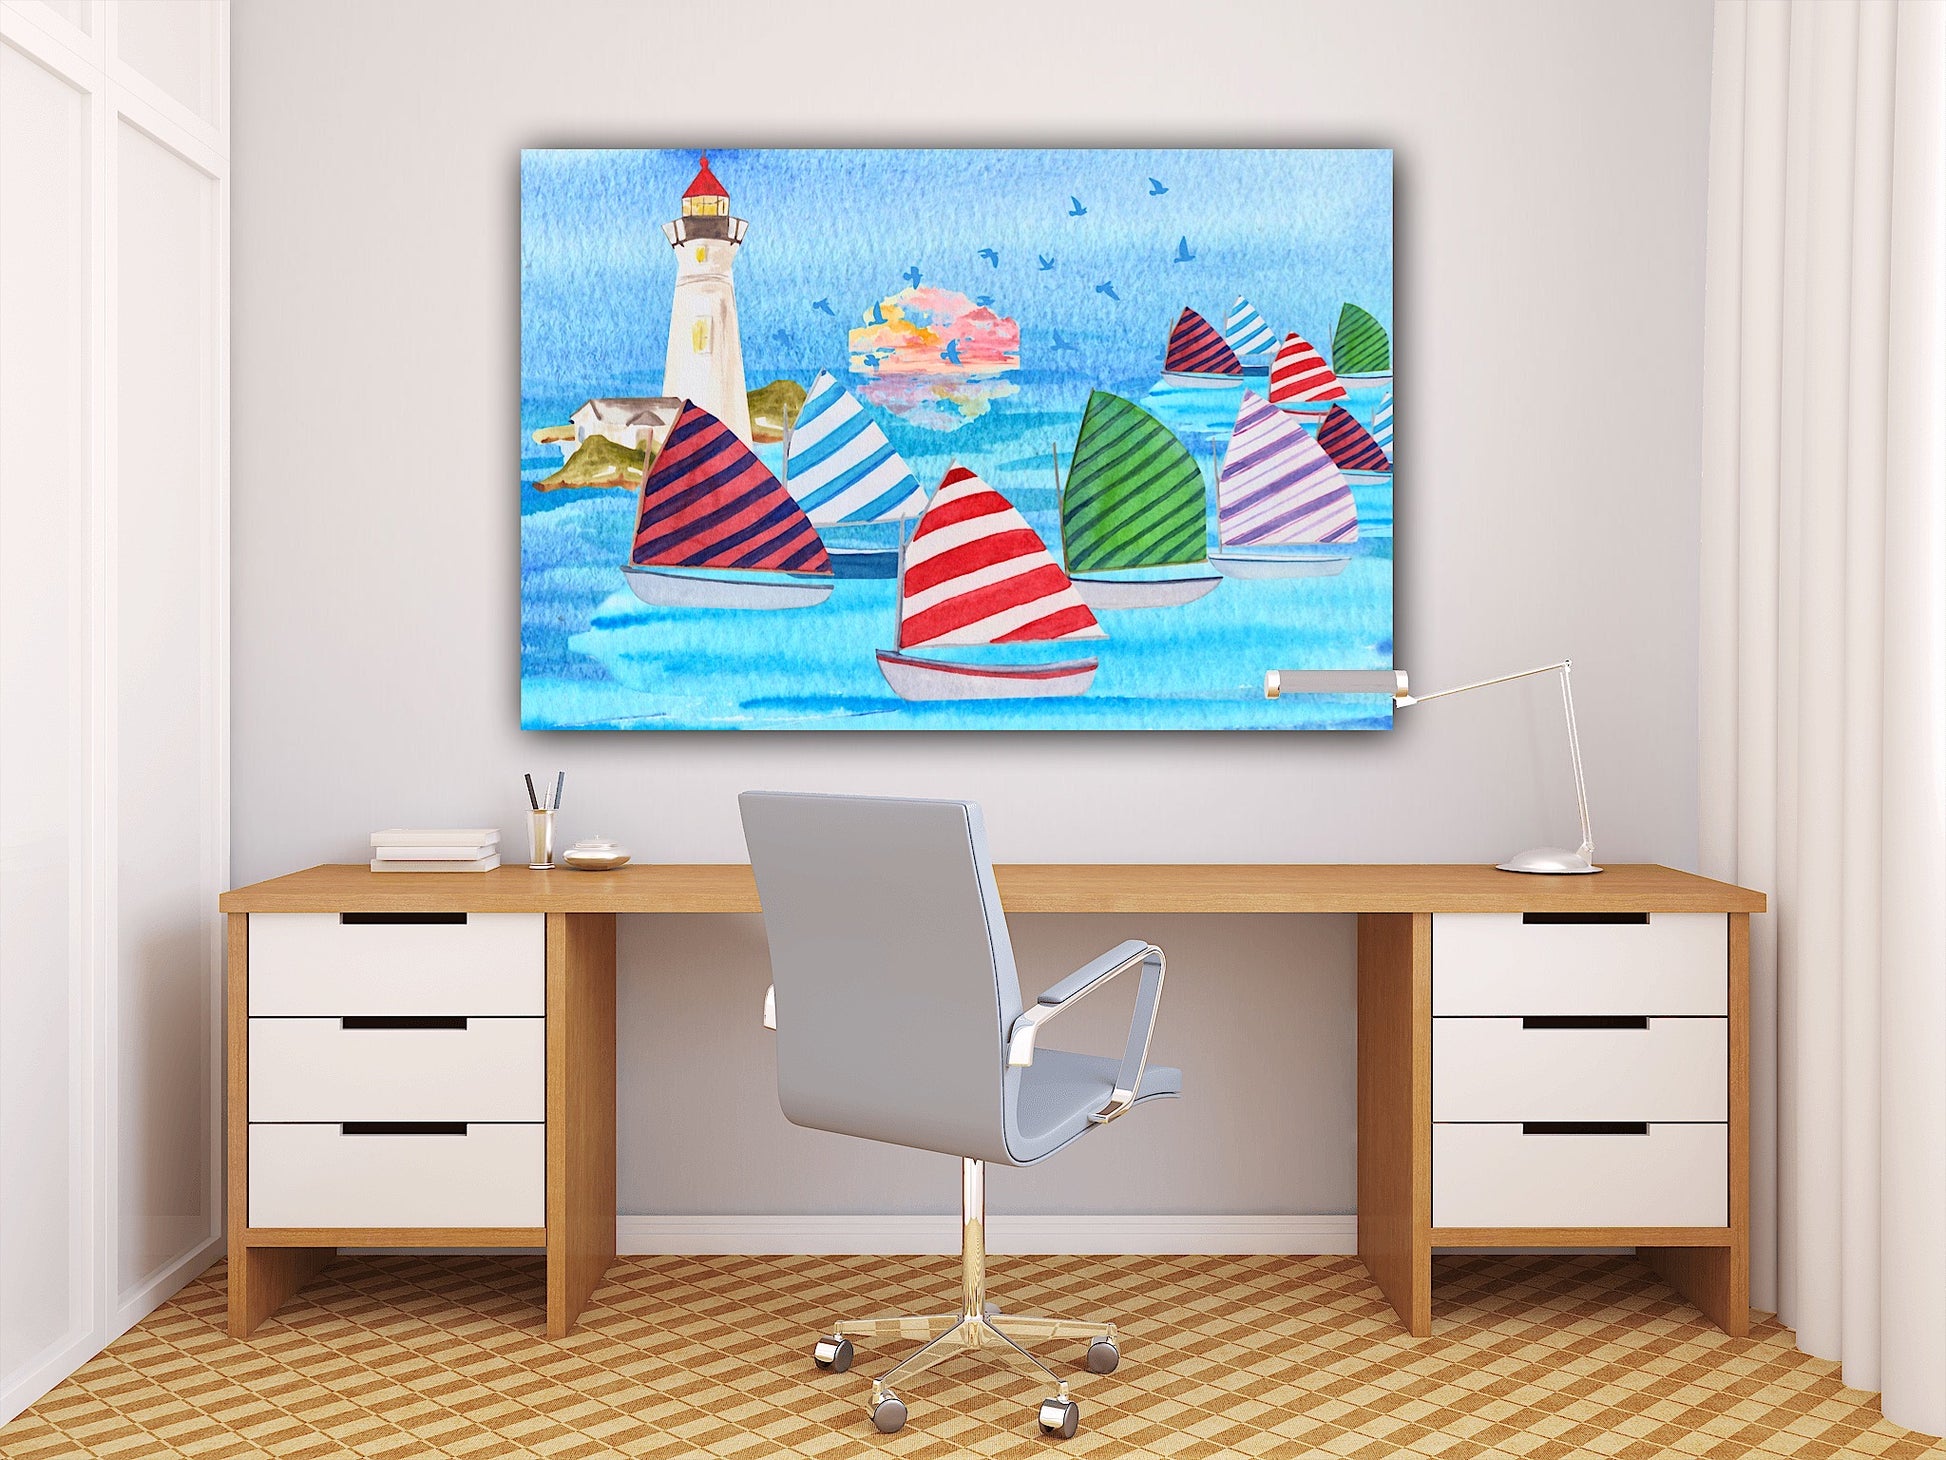 Rainbow Fleet canvas home office decor by Jacqueline mb designs